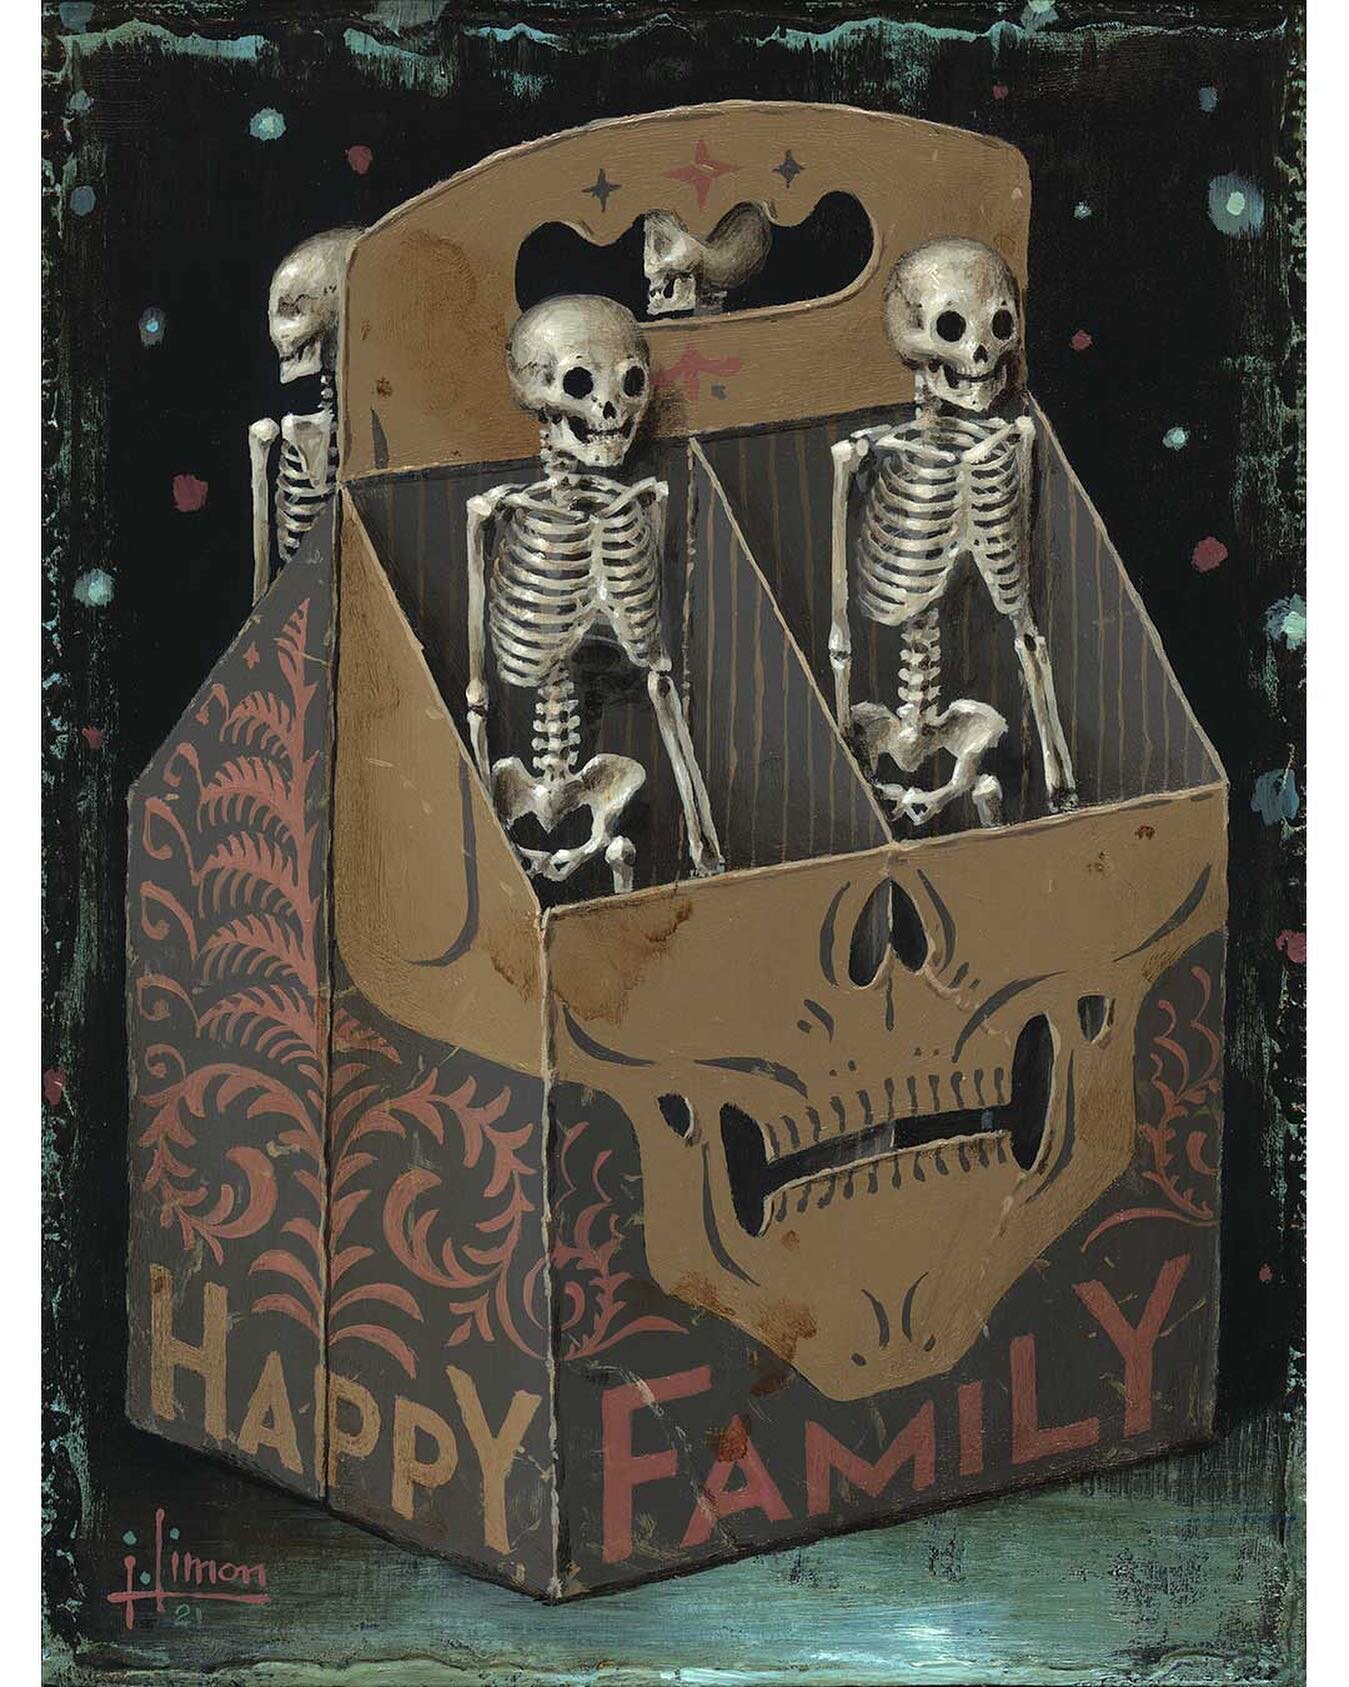 &ldquo;Happy Family&rdquo;, 6x8 inches #fragment #art #painting #artprint #skull #skeleton